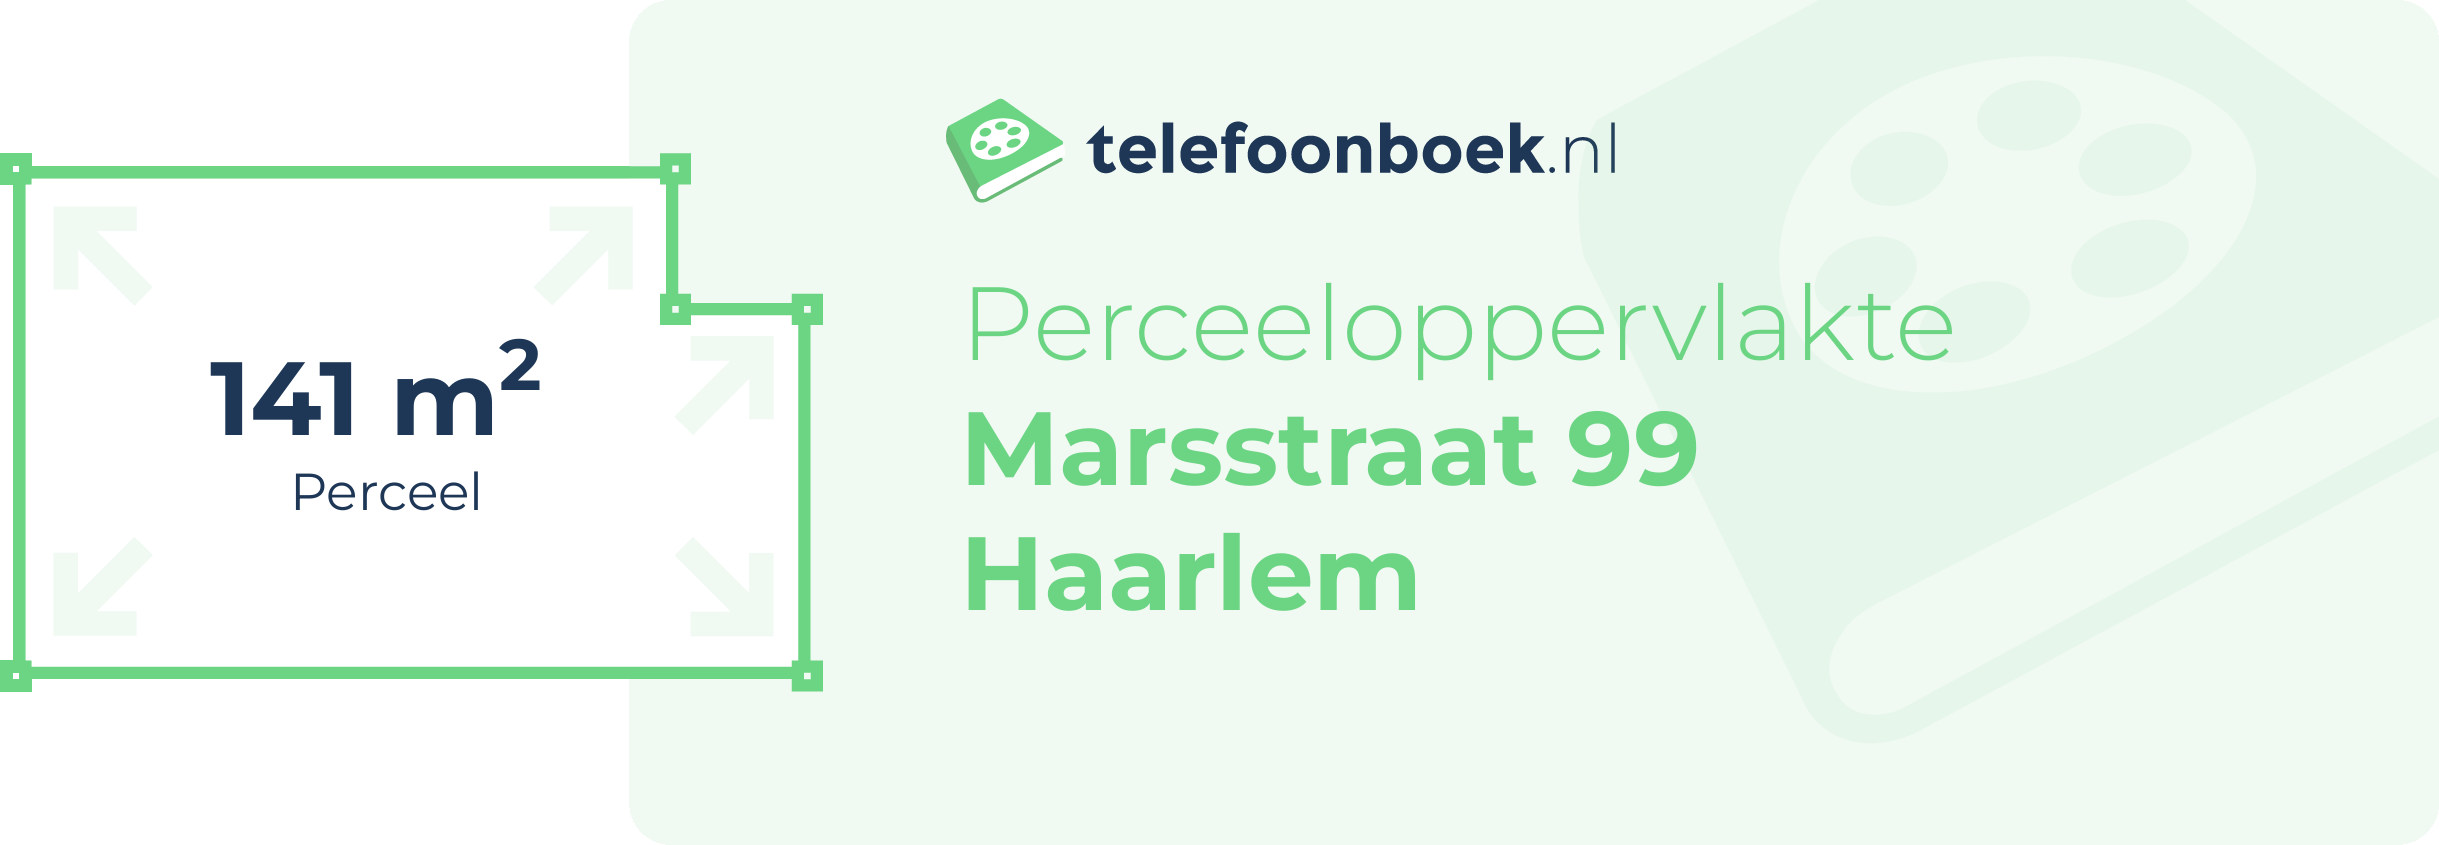 Perceeloppervlakte Marsstraat 99 Haarlem